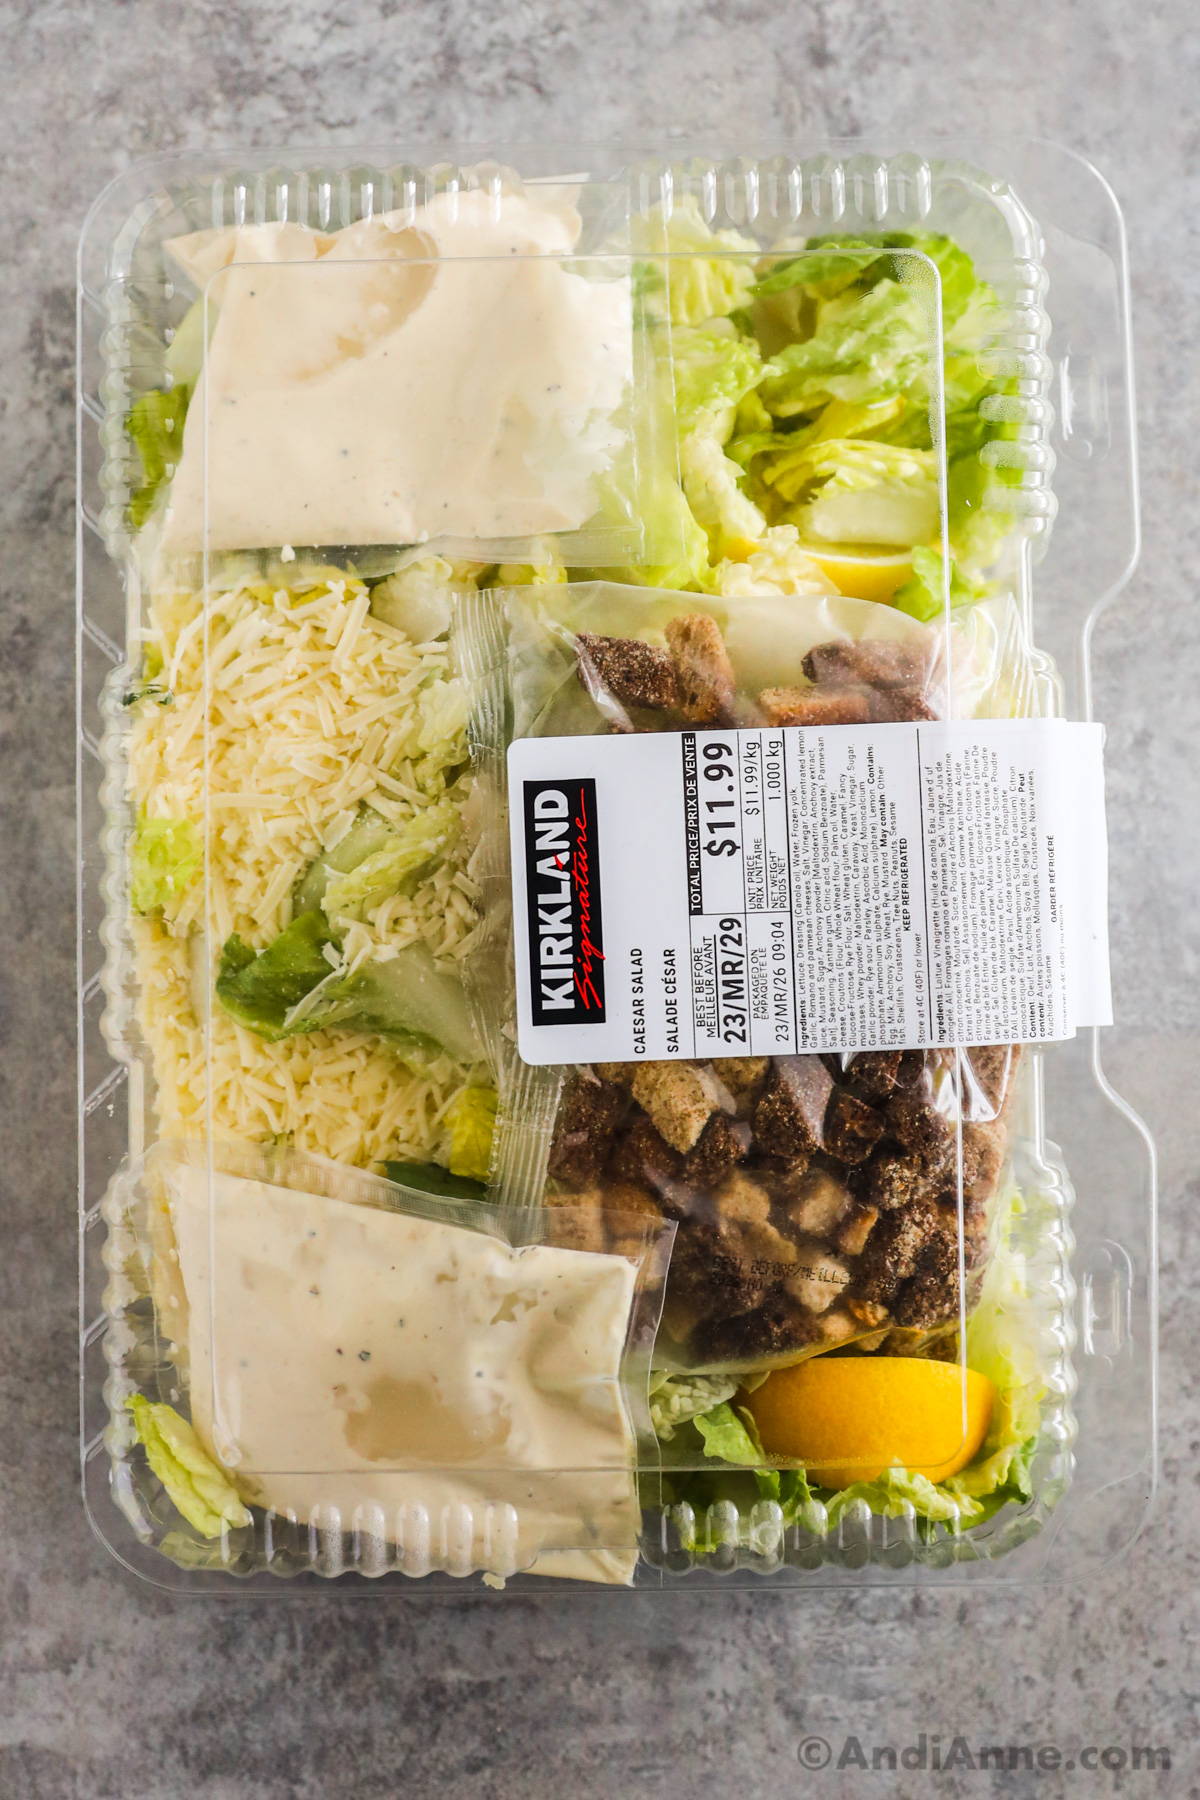 A container of Costco caesar salad. 